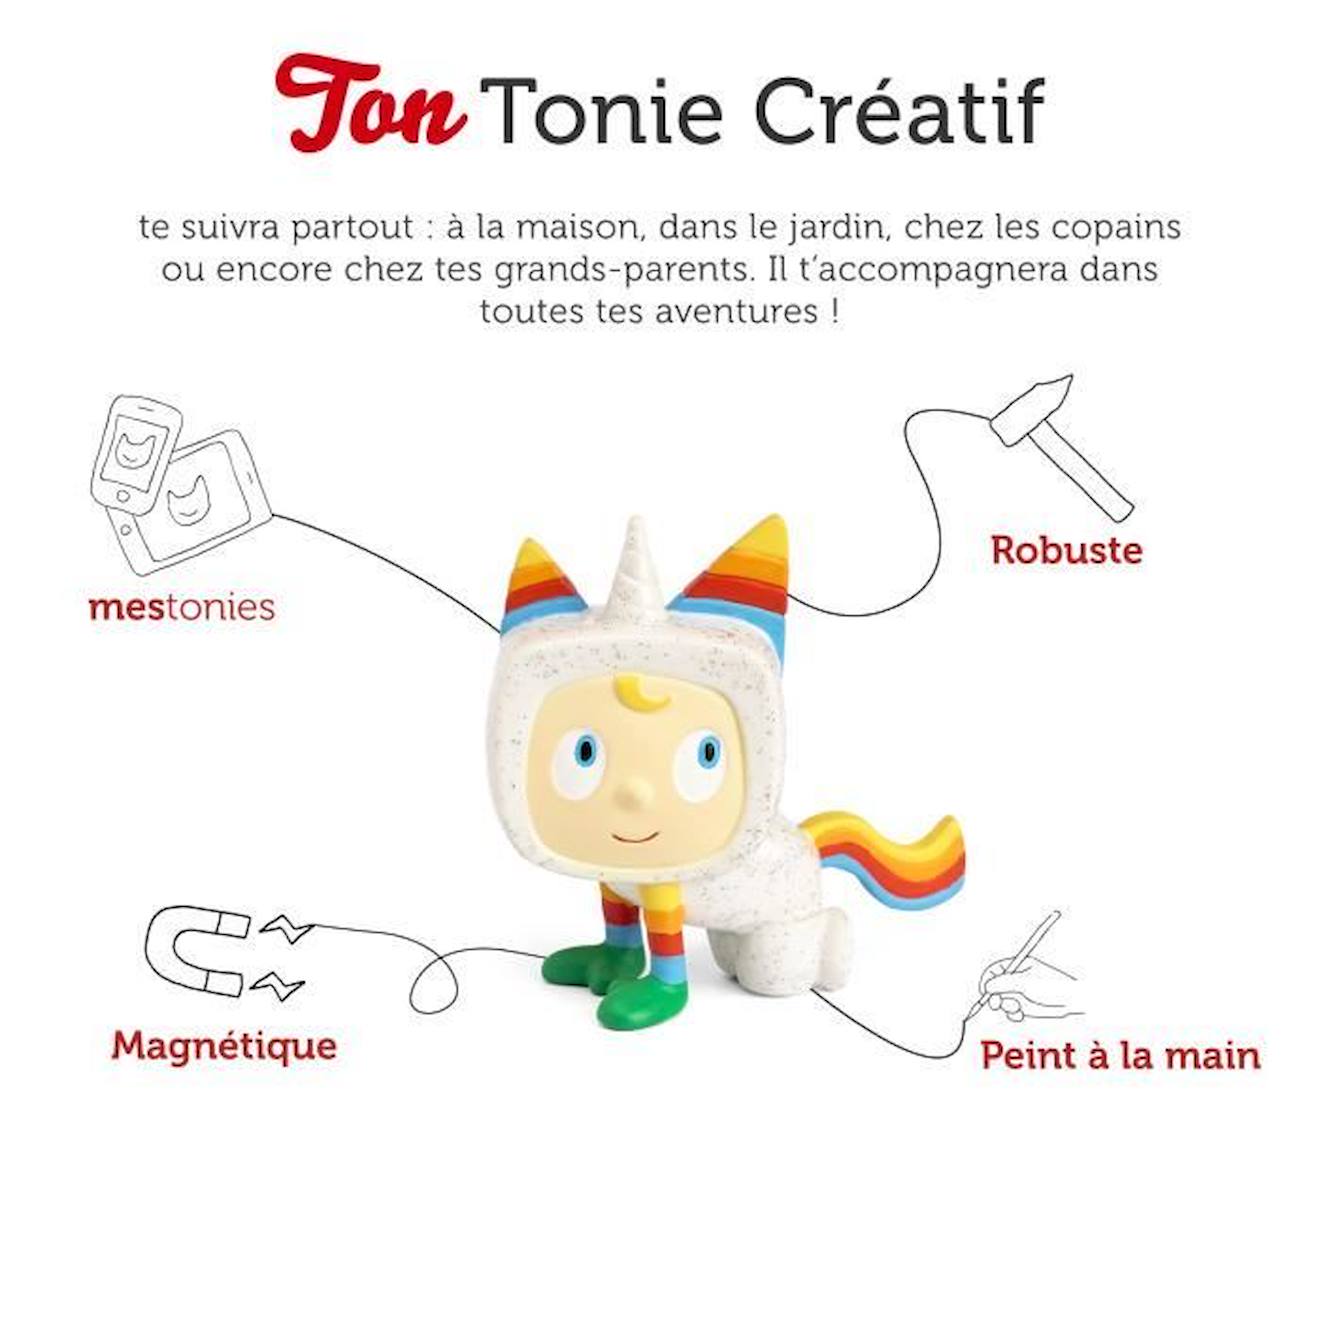 https://media.vertbaudet.fr/Pictures/vertbaudet/343896/tonies-figurine-tonie-creatif-licorne-figurine-audio-pour-toniebox.jpg